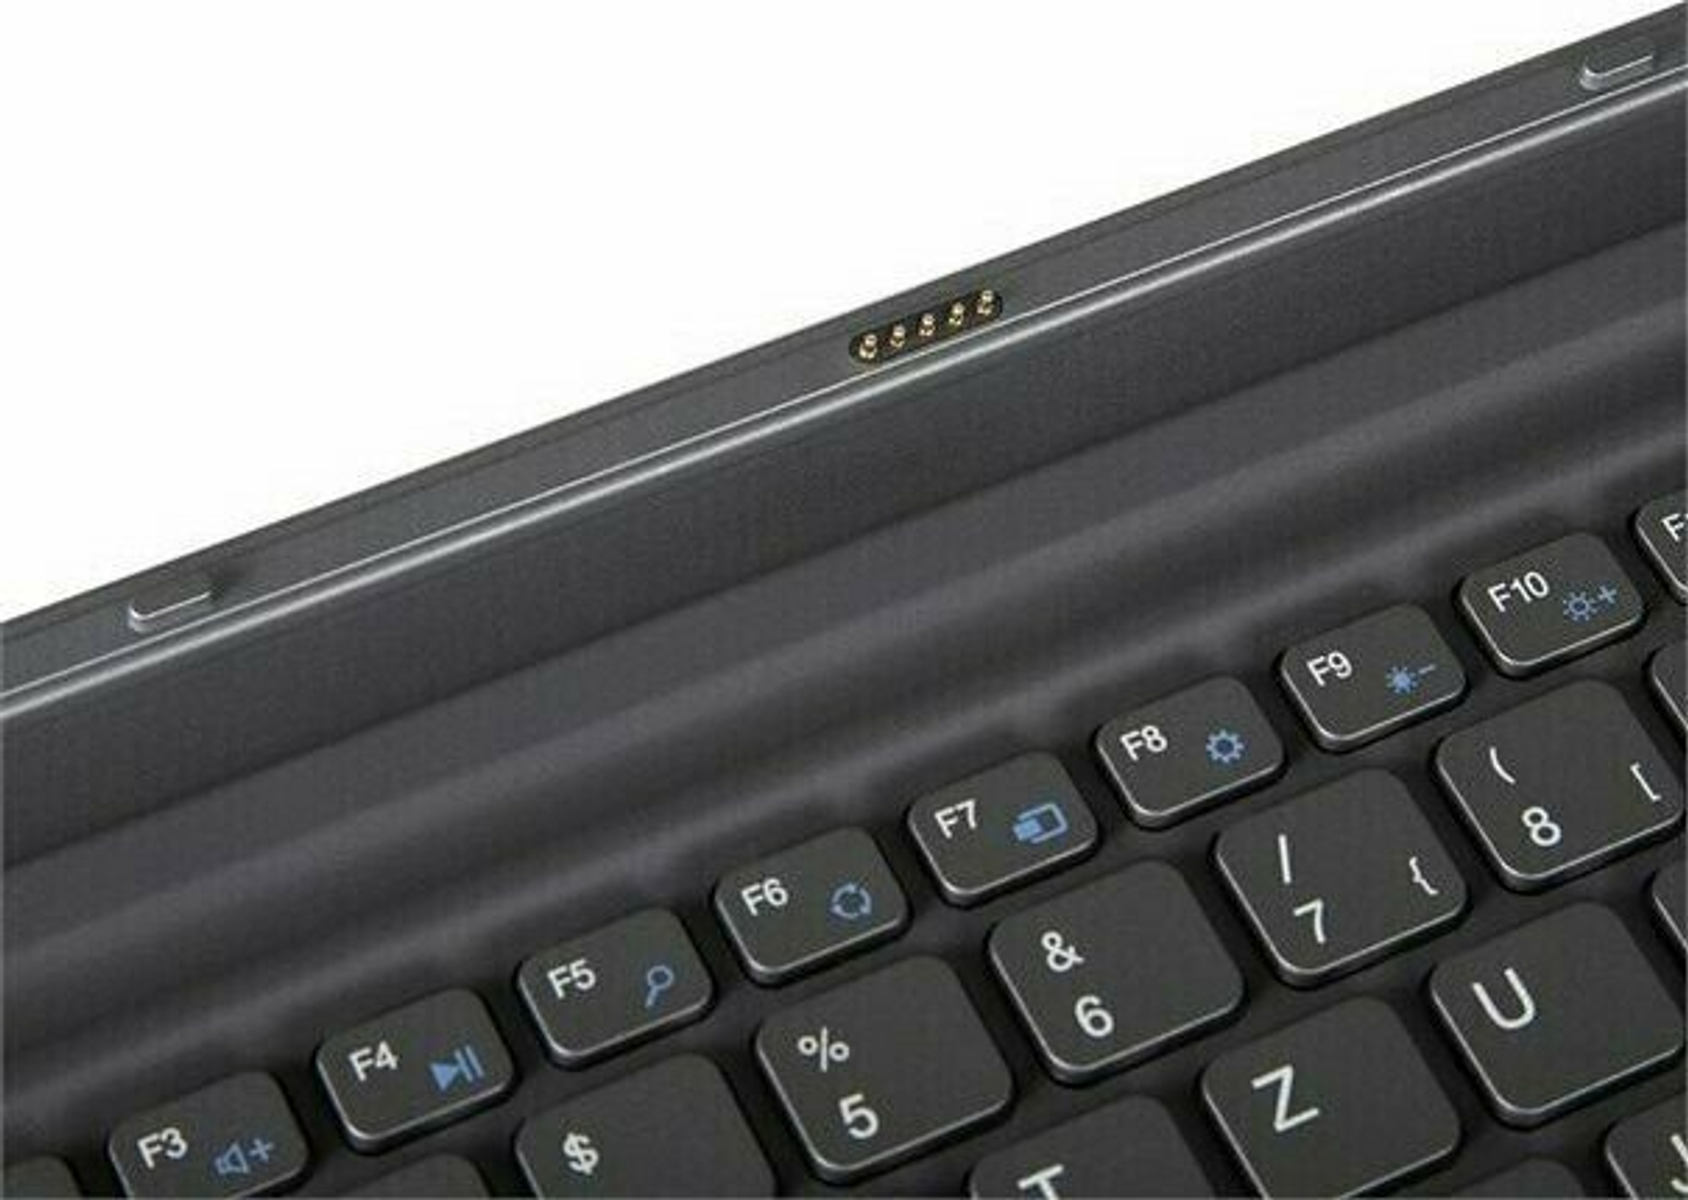 TERRA S116 KEYBOARD/US, Tablet Tastatur